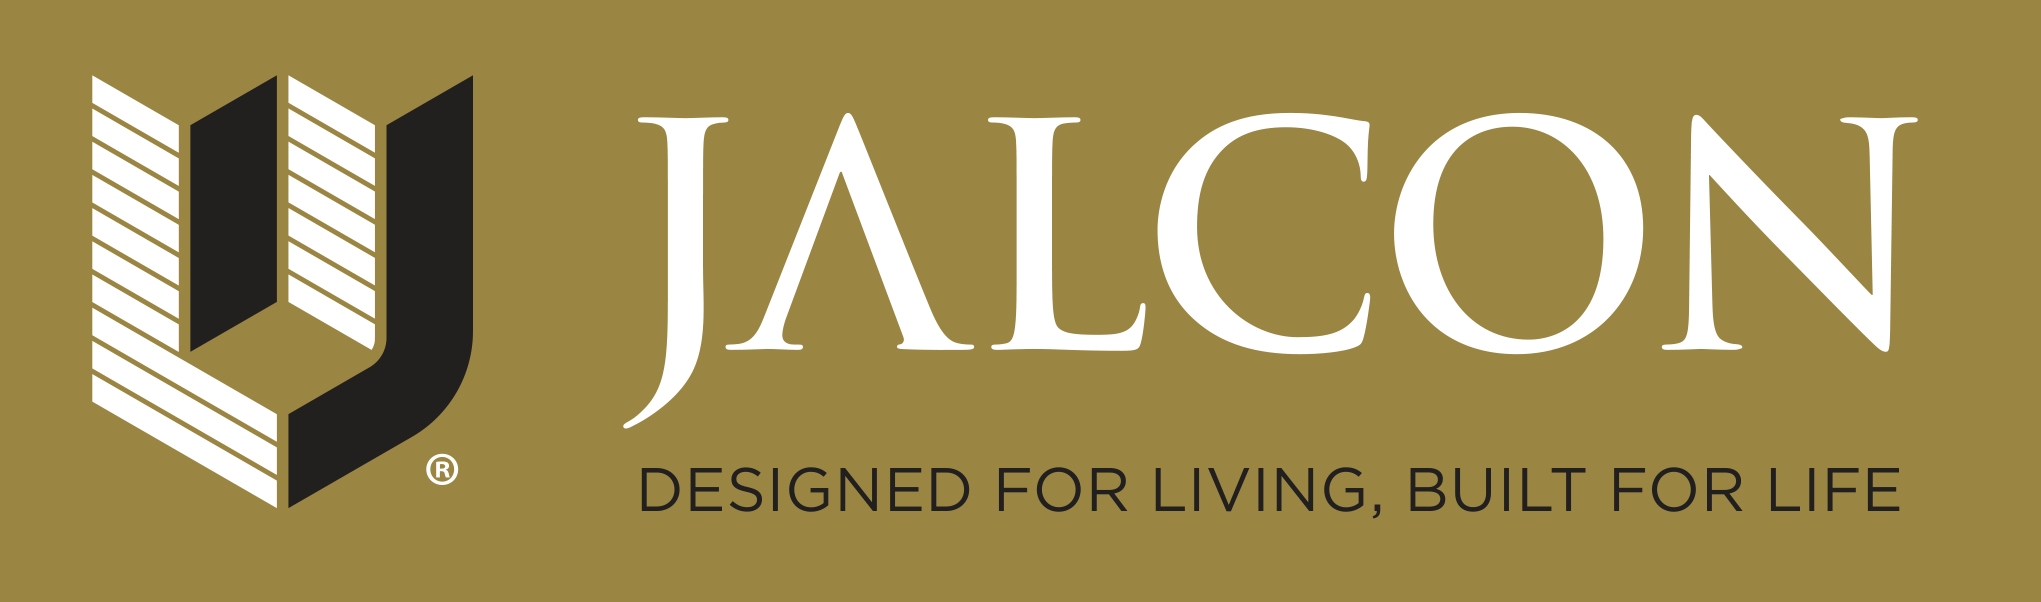 Jalcon Logo